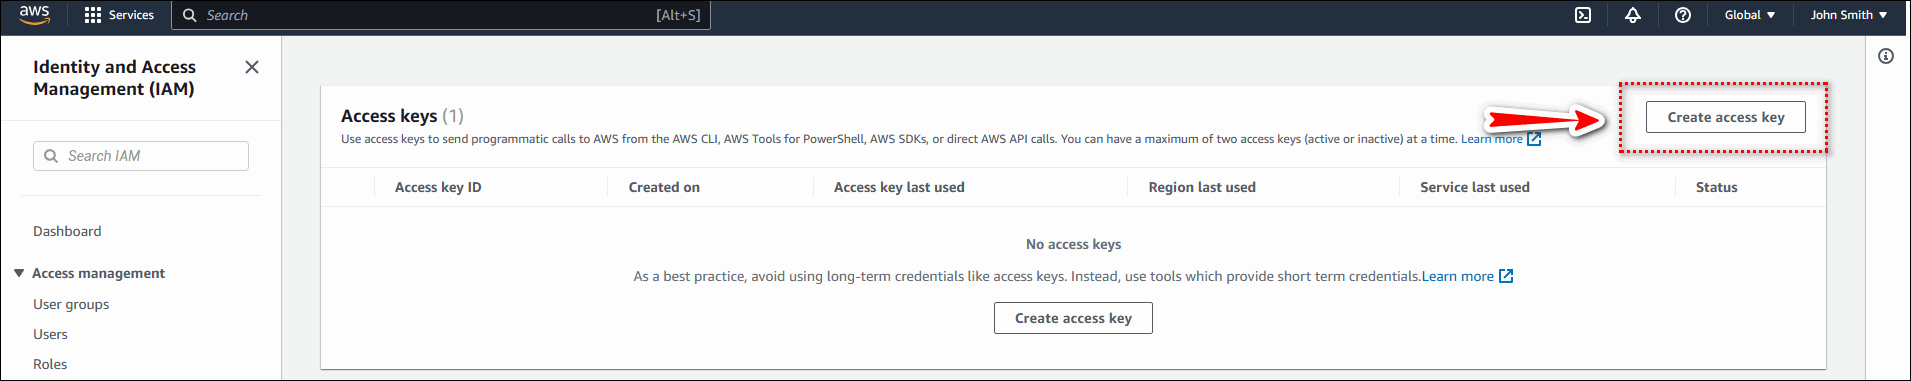 Create access key 